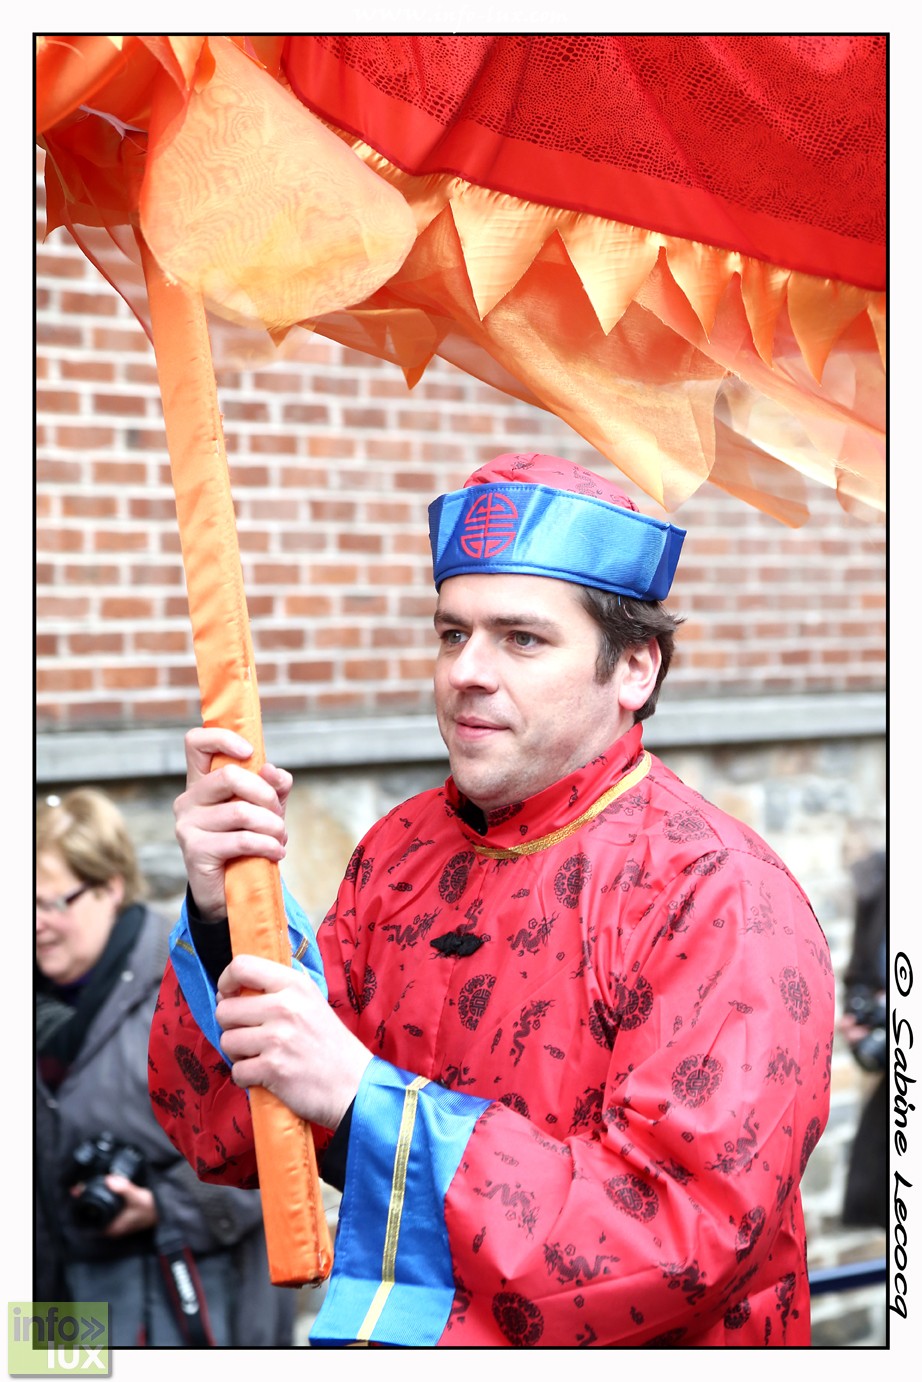 images/stories/PHOTOSREP/La-Roche-en-Ardenne/Carnaval2/Carnaval-larocheb055